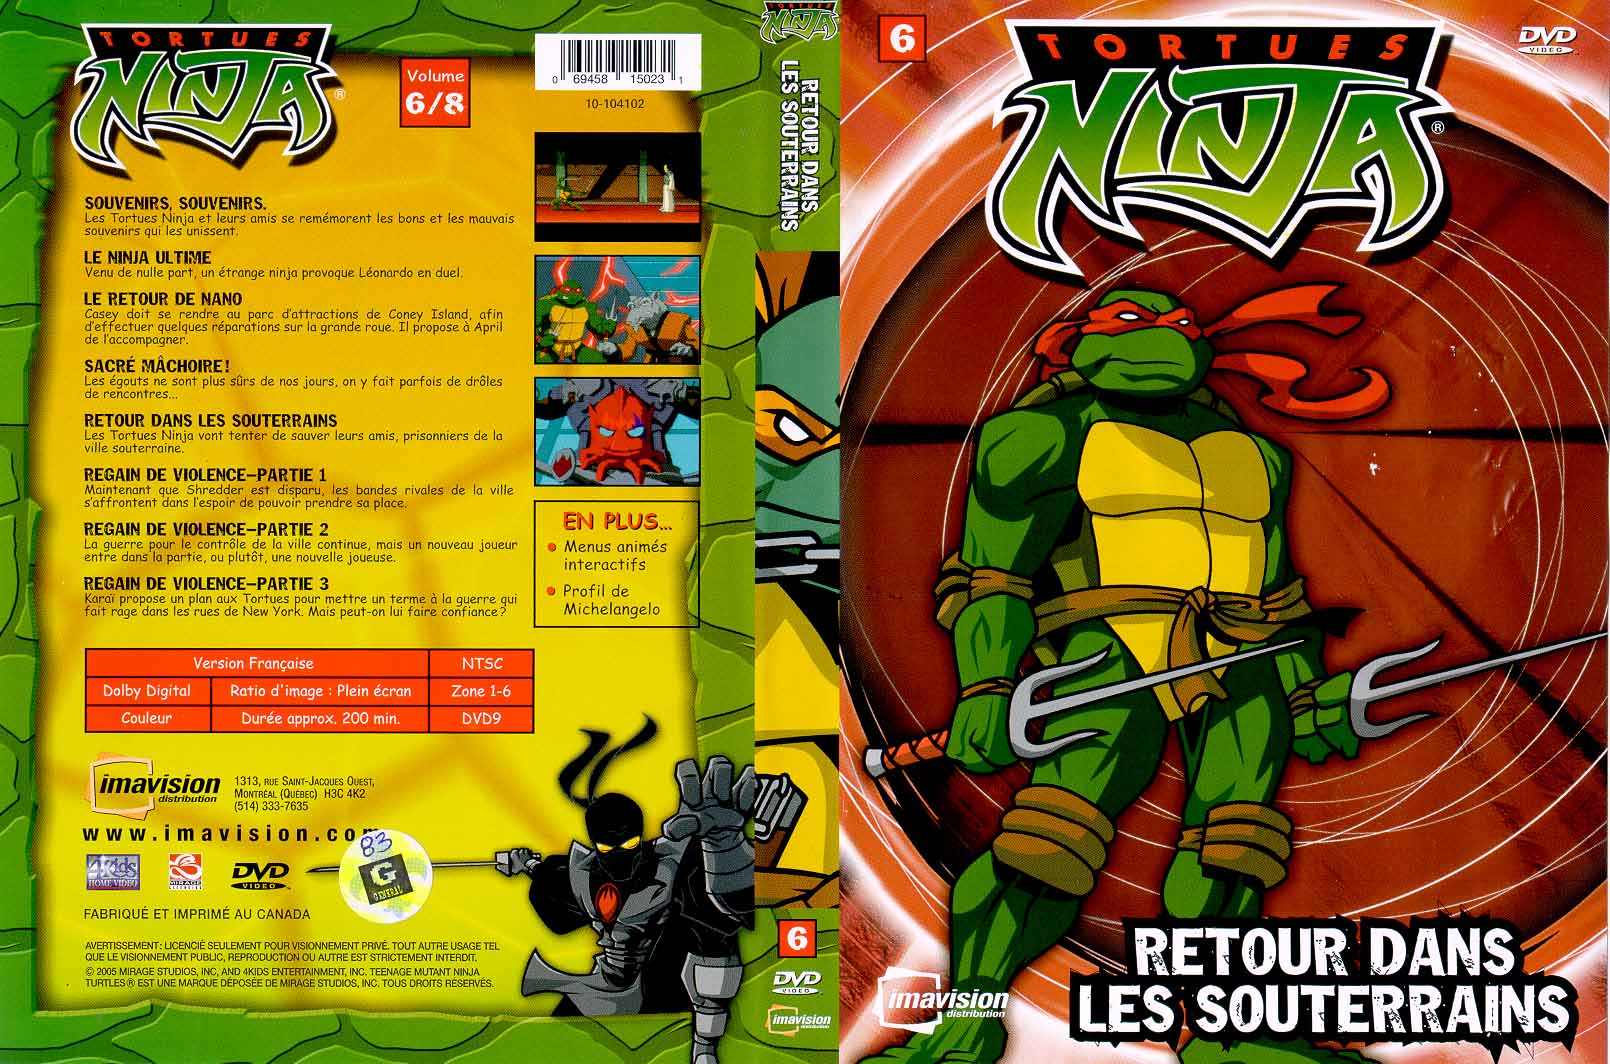 Jaquette DVD Tortues Ninja vol 6